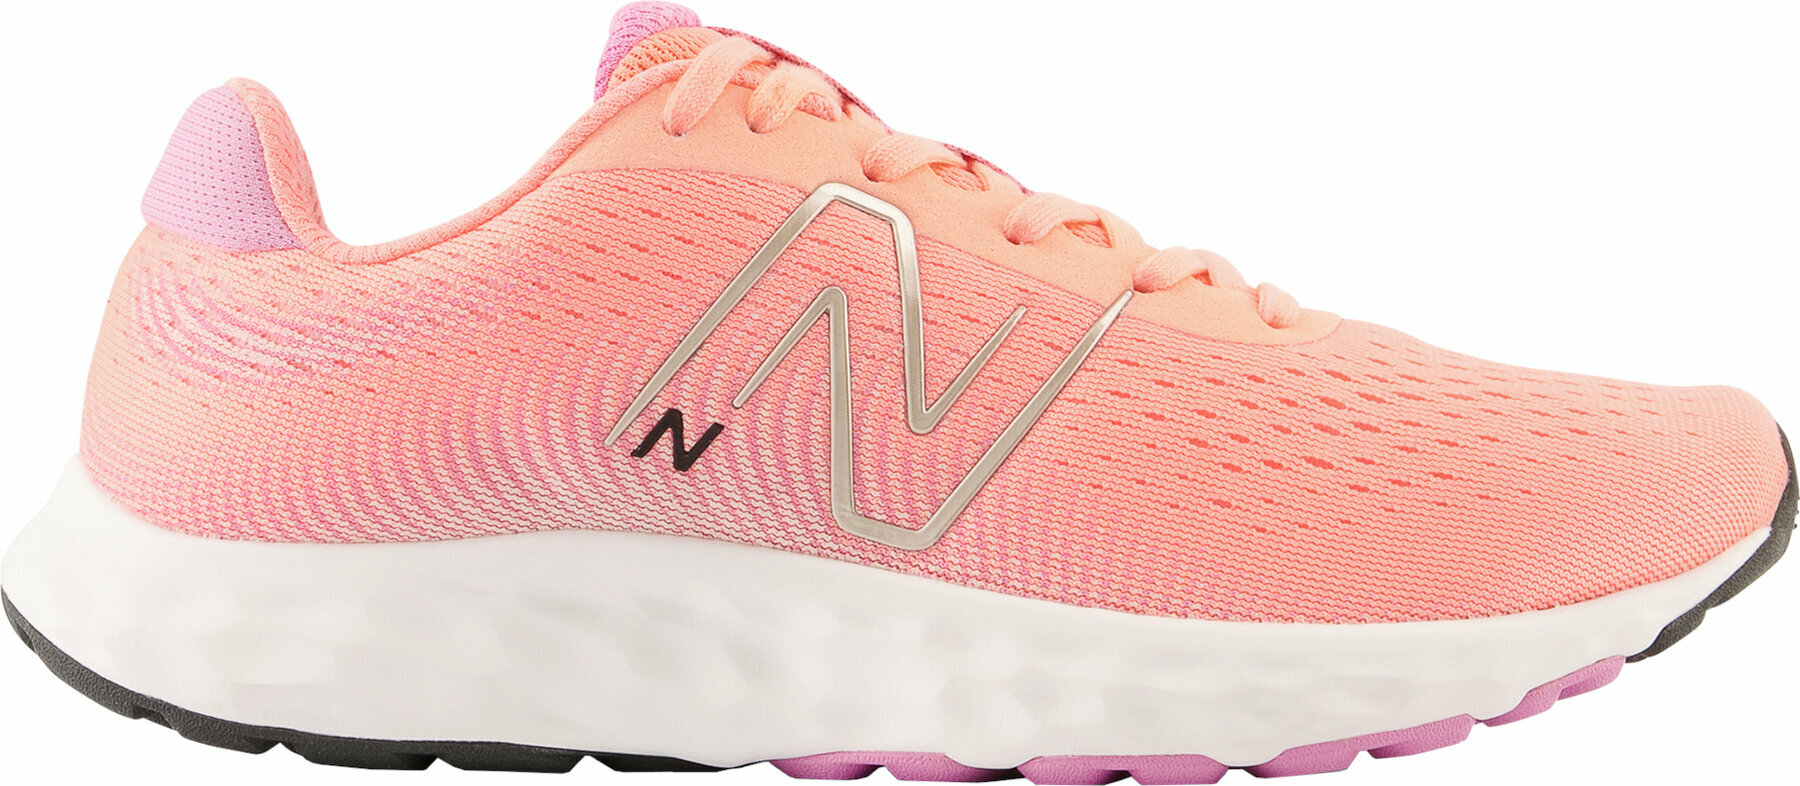 Cestna tekaška obutev
 New Balance Womens W520 Pink 40 Cestna tekaška obutev